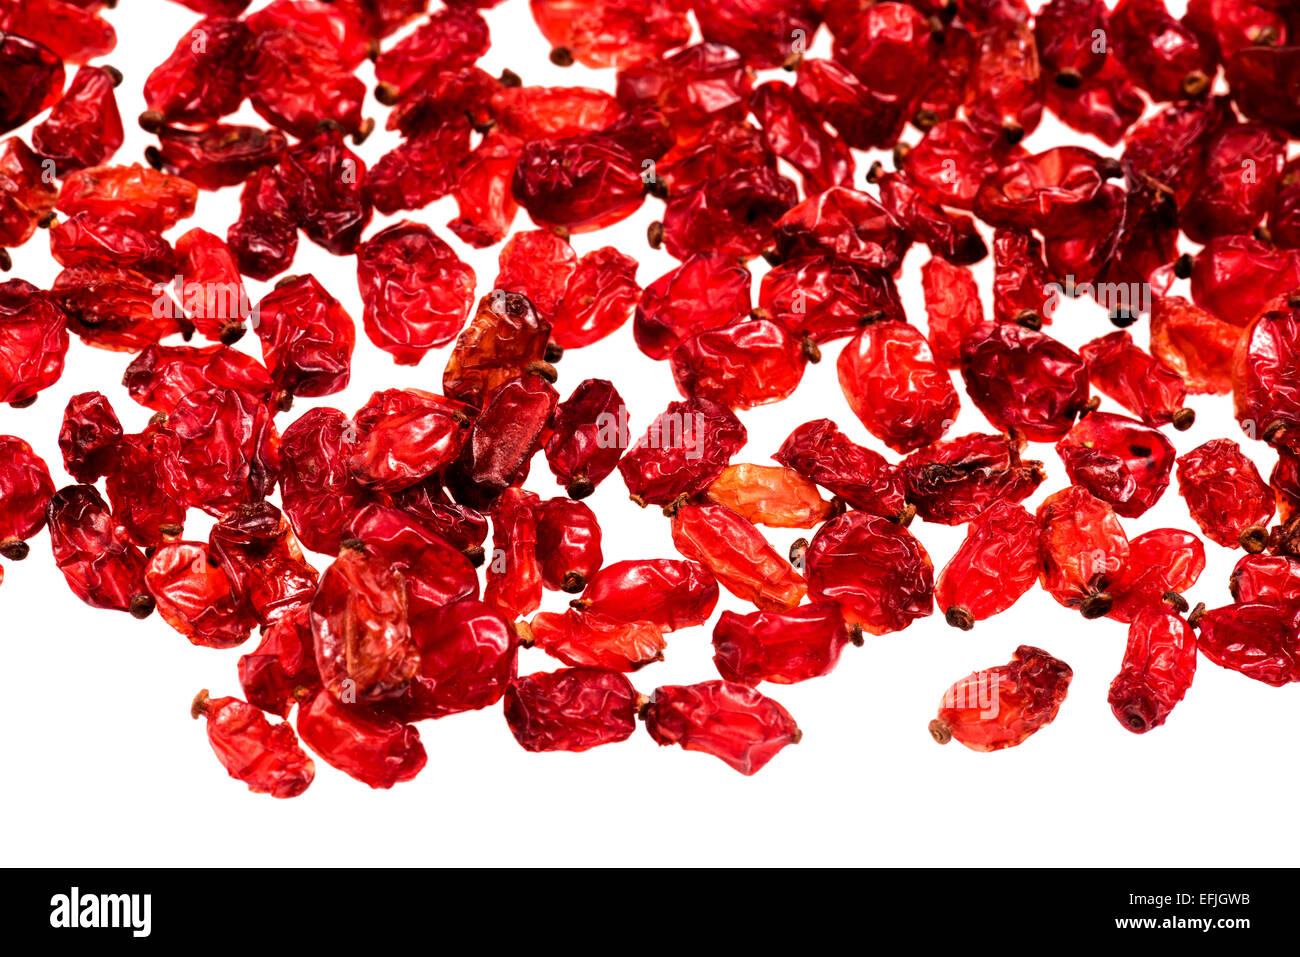 Berberis Vulgaris Beeren rot sauer süß Backen Kochen leckere Tee Strukturen  Früchte getrocknet Rosinen ohne Ausschnitt auf wh Stockfotografie - Alamy